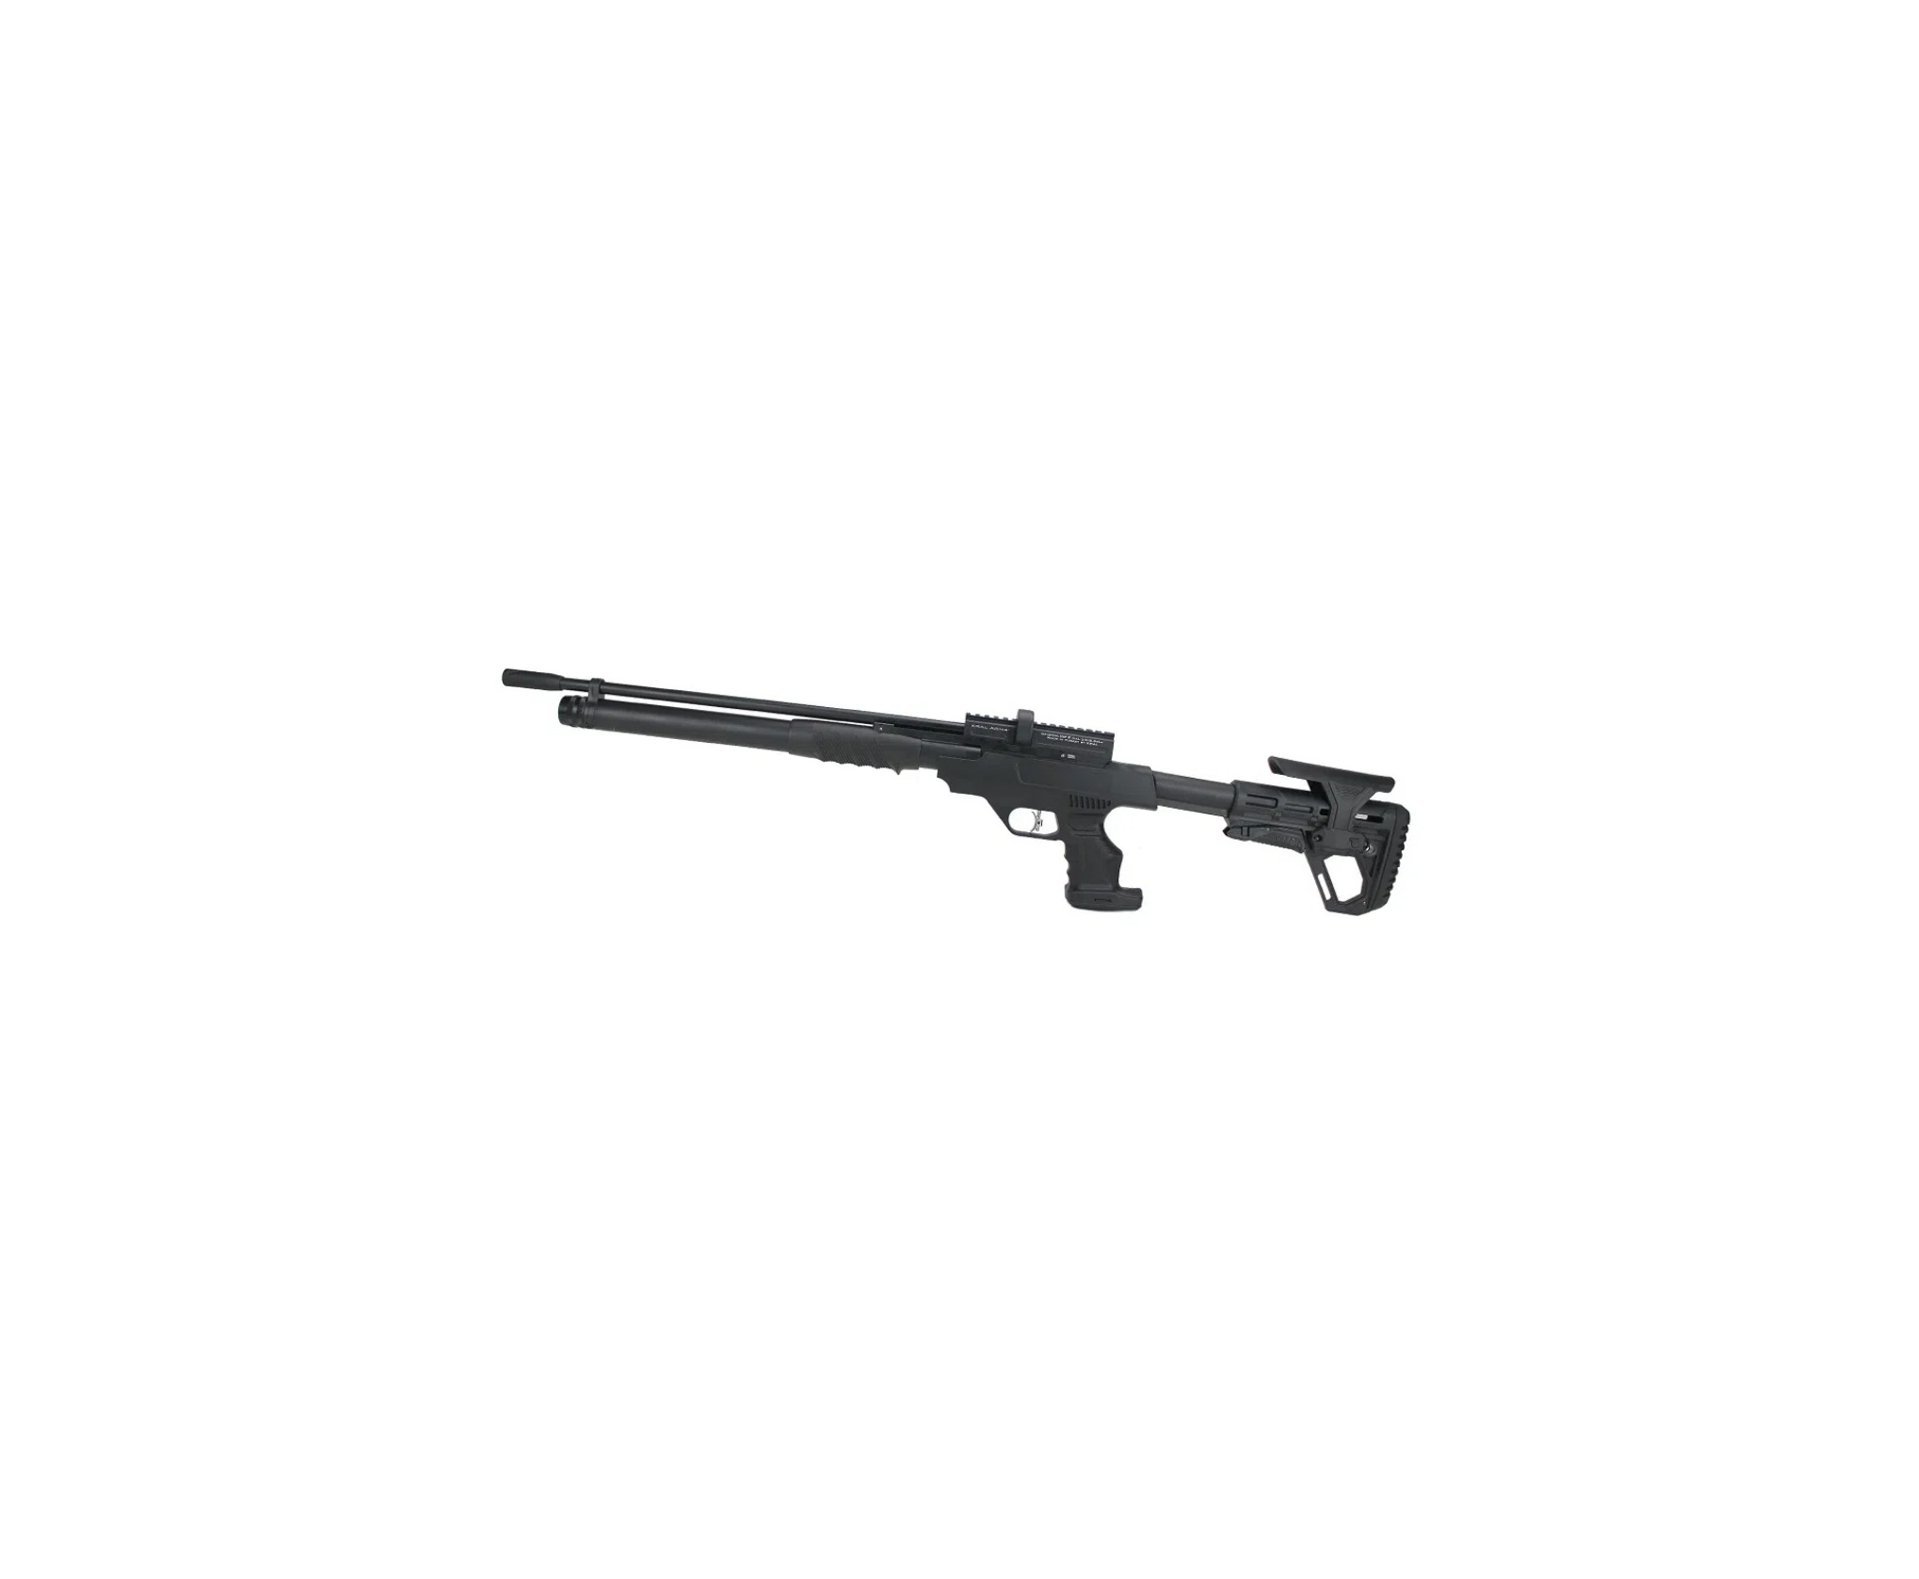 Carabina de Pressão PCP Puncher Rambo S. Black 5.5mm - Kral Arms + Bomba + Luneta 4-16x50 + Mount 22